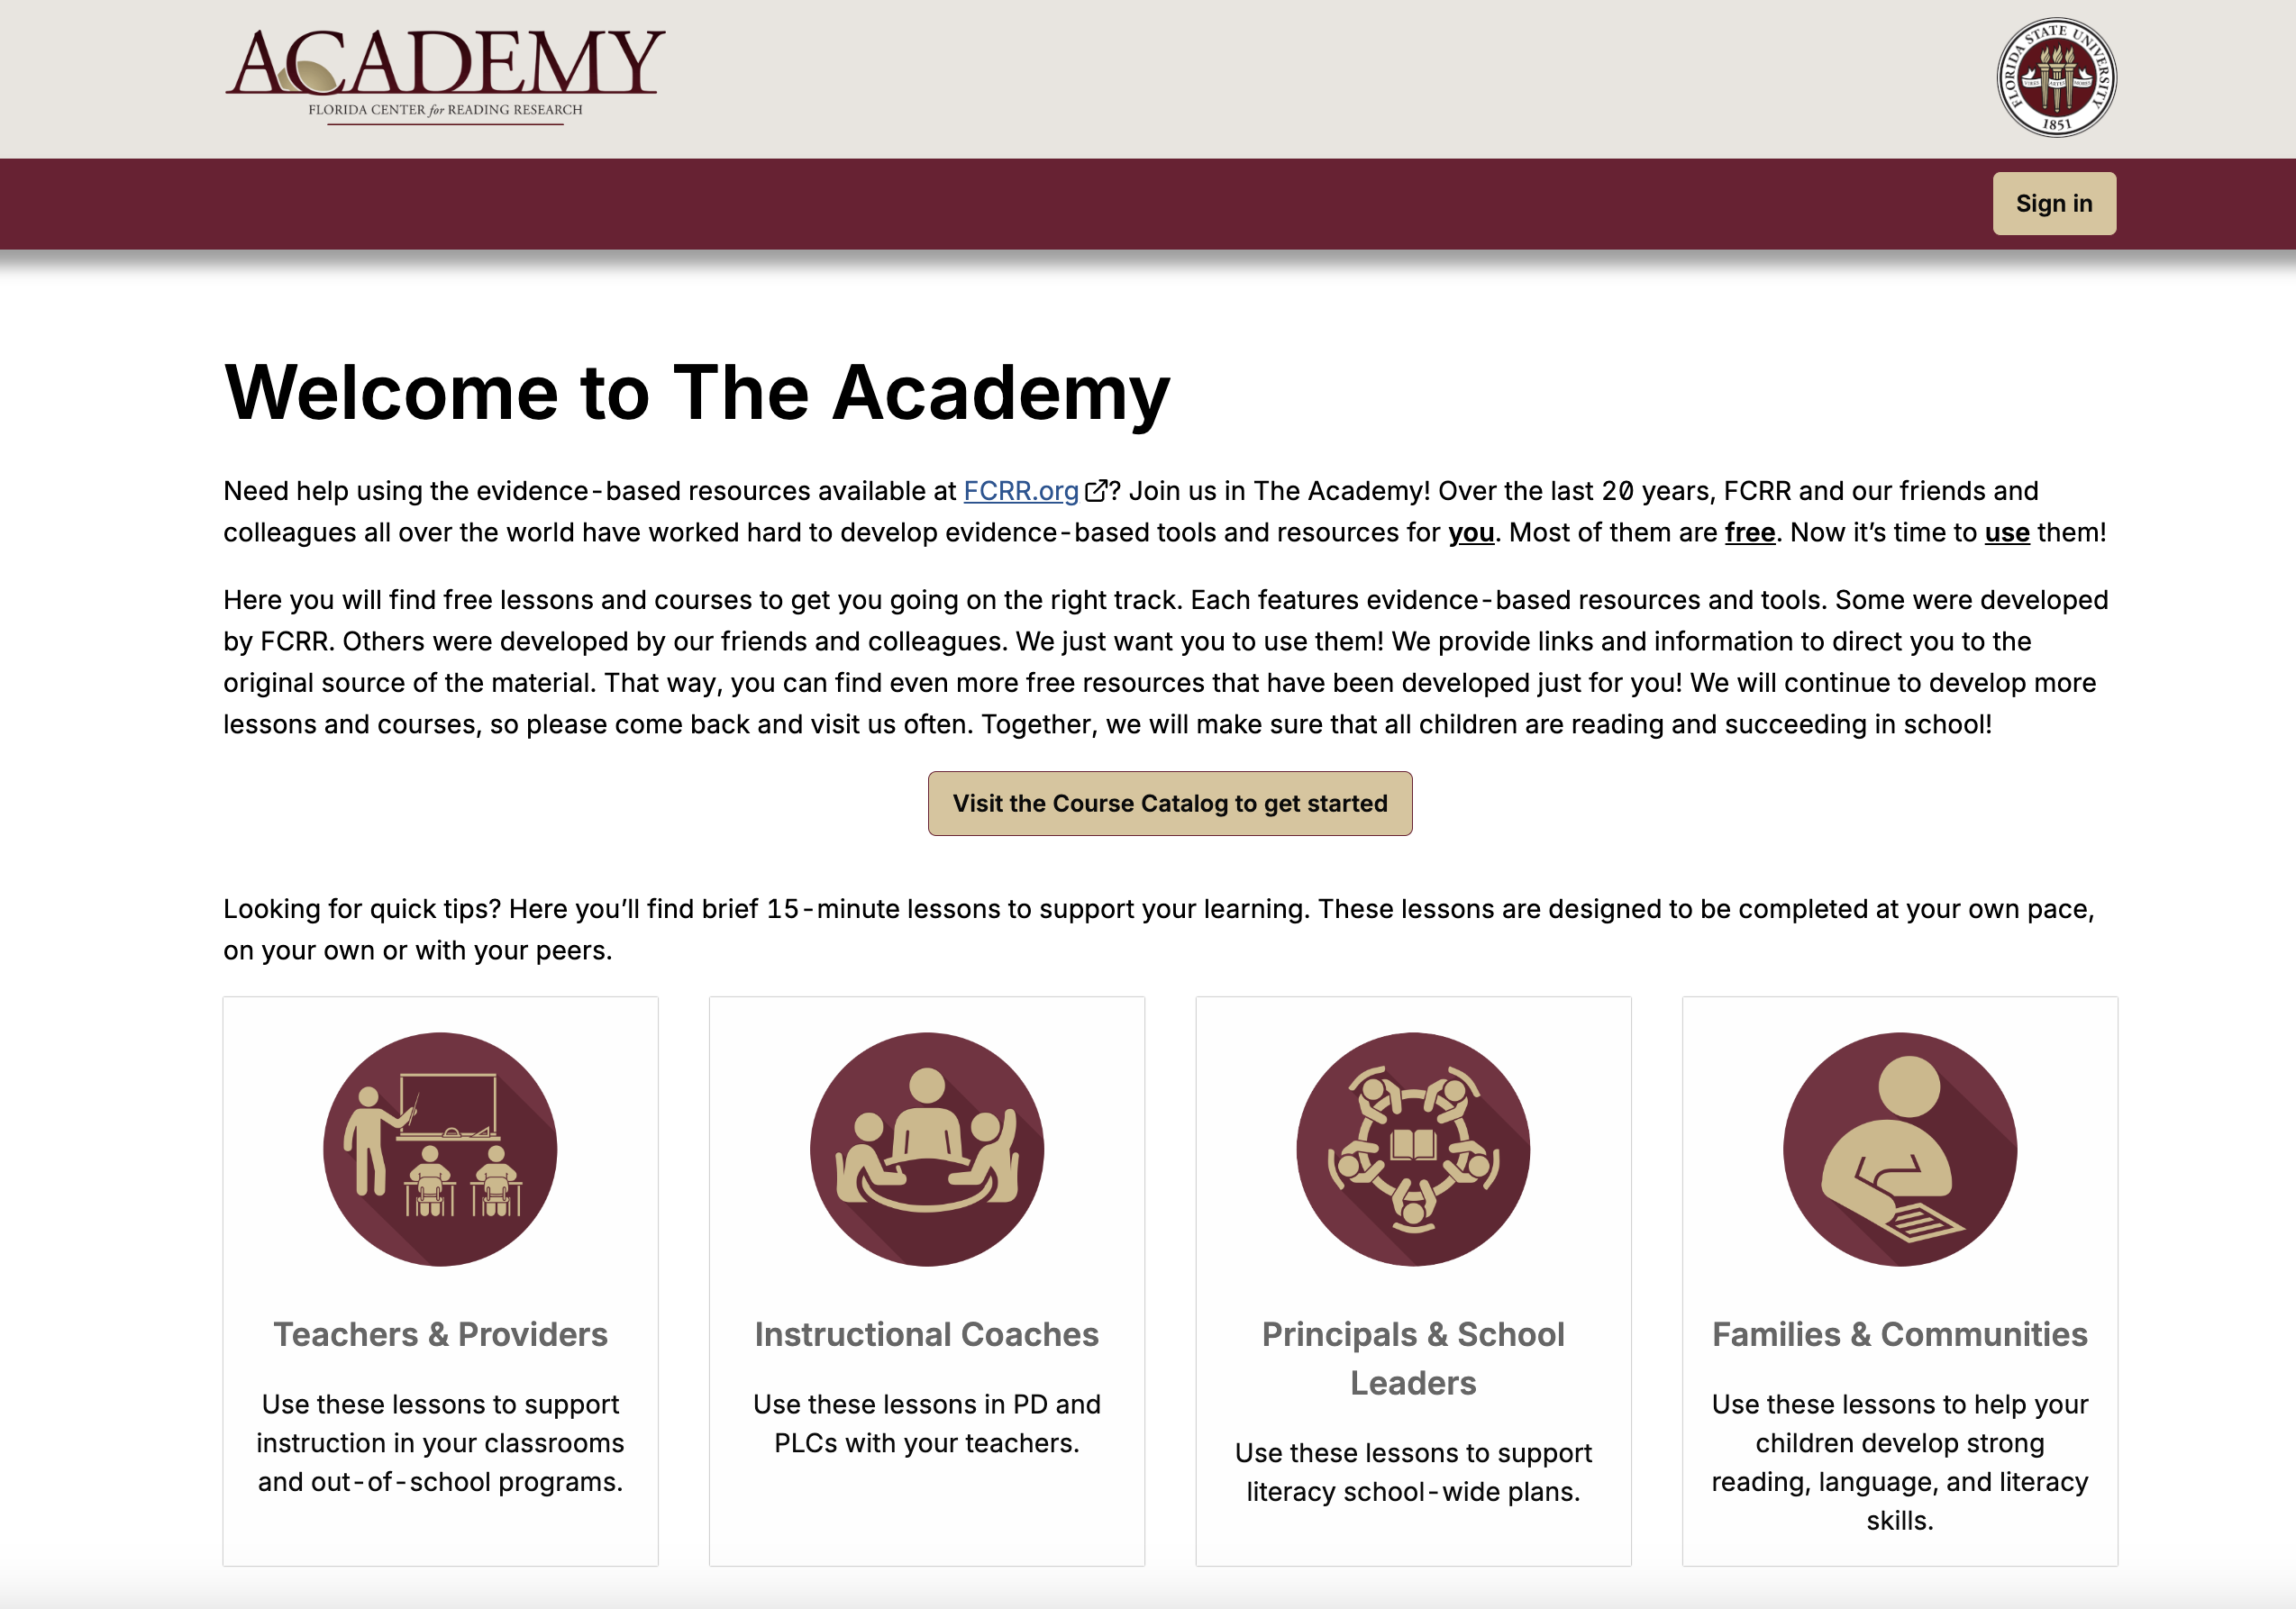 The Academy website